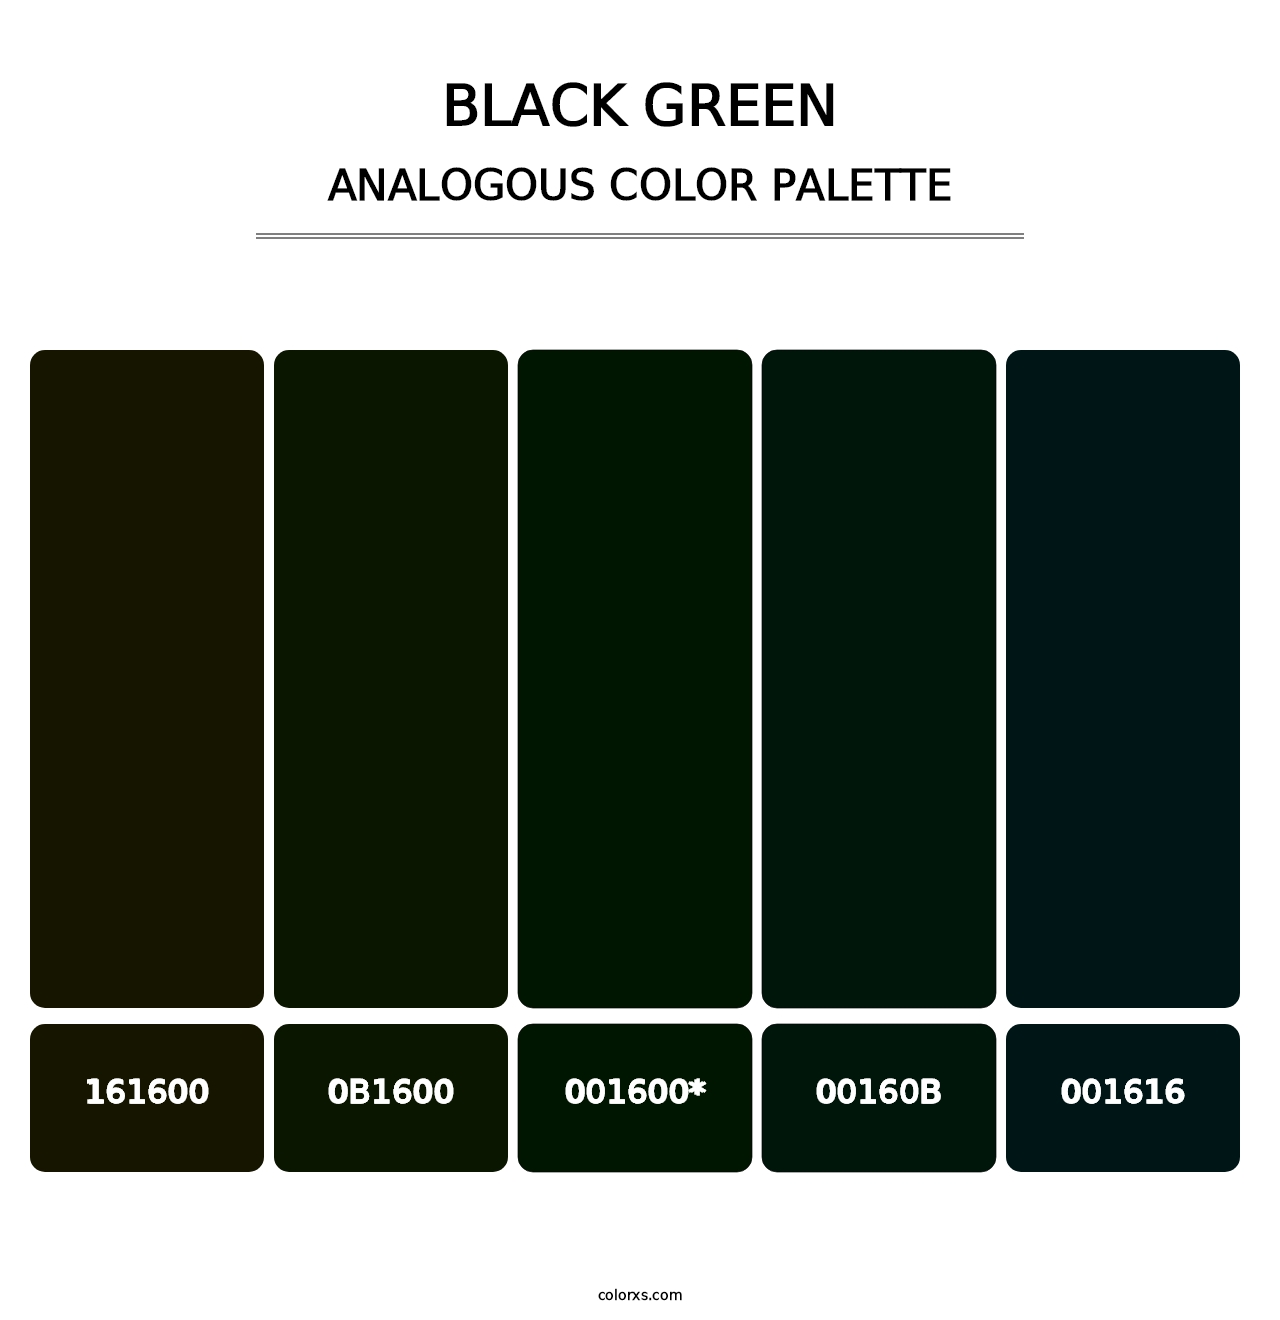 Black Green - Analogous Color Palette